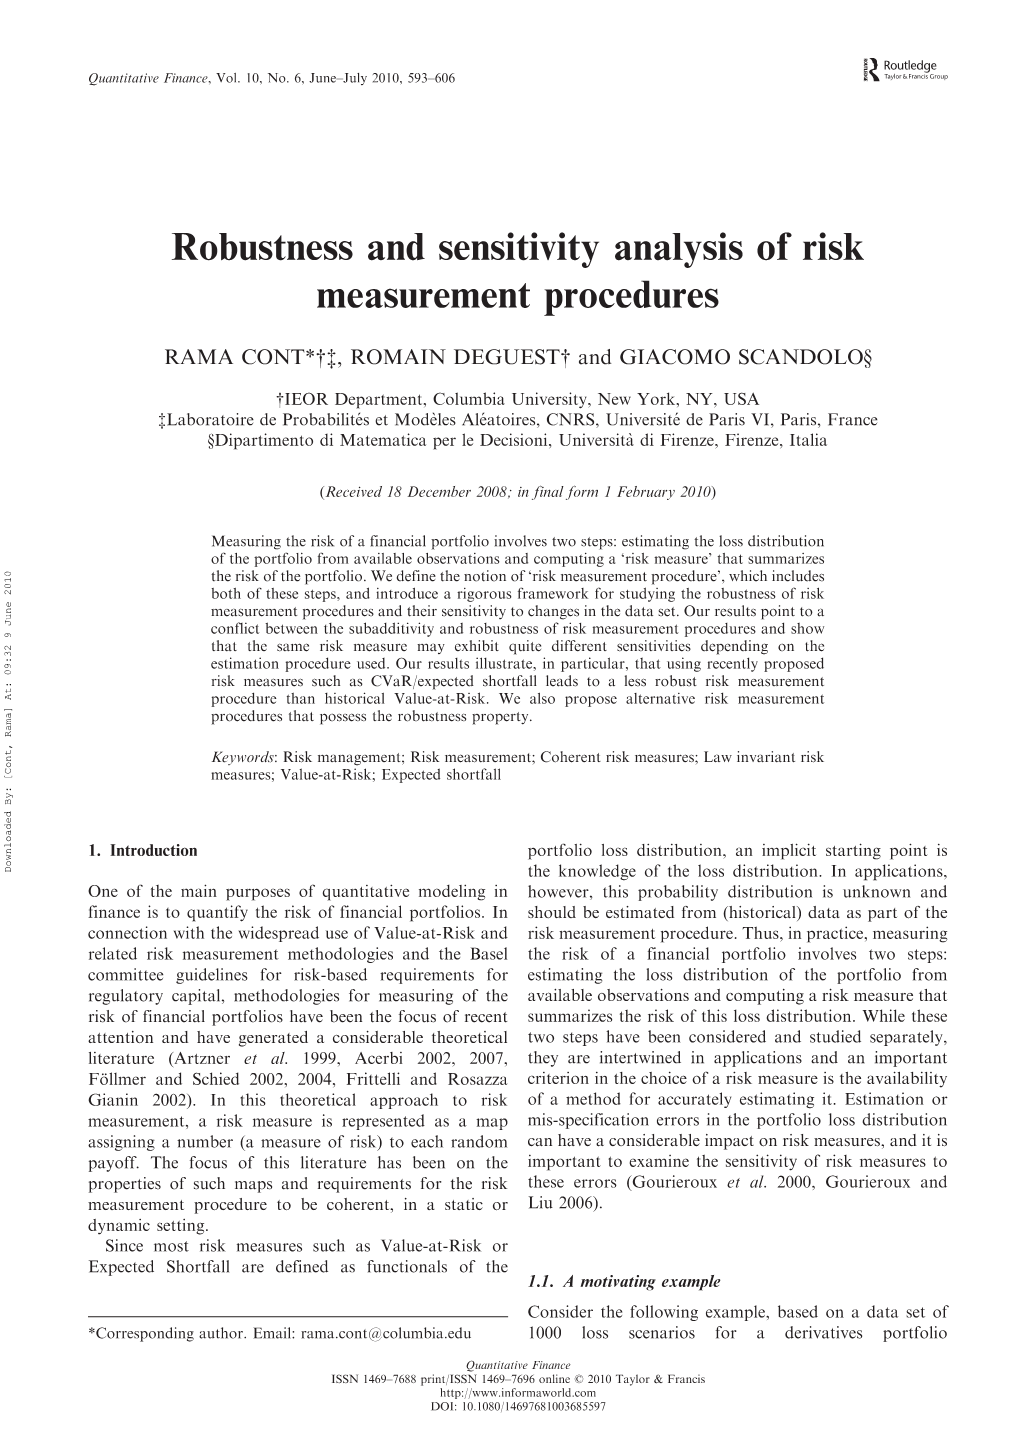 Robustness and Sensitivity Analysis of Risk Measurement Procedures